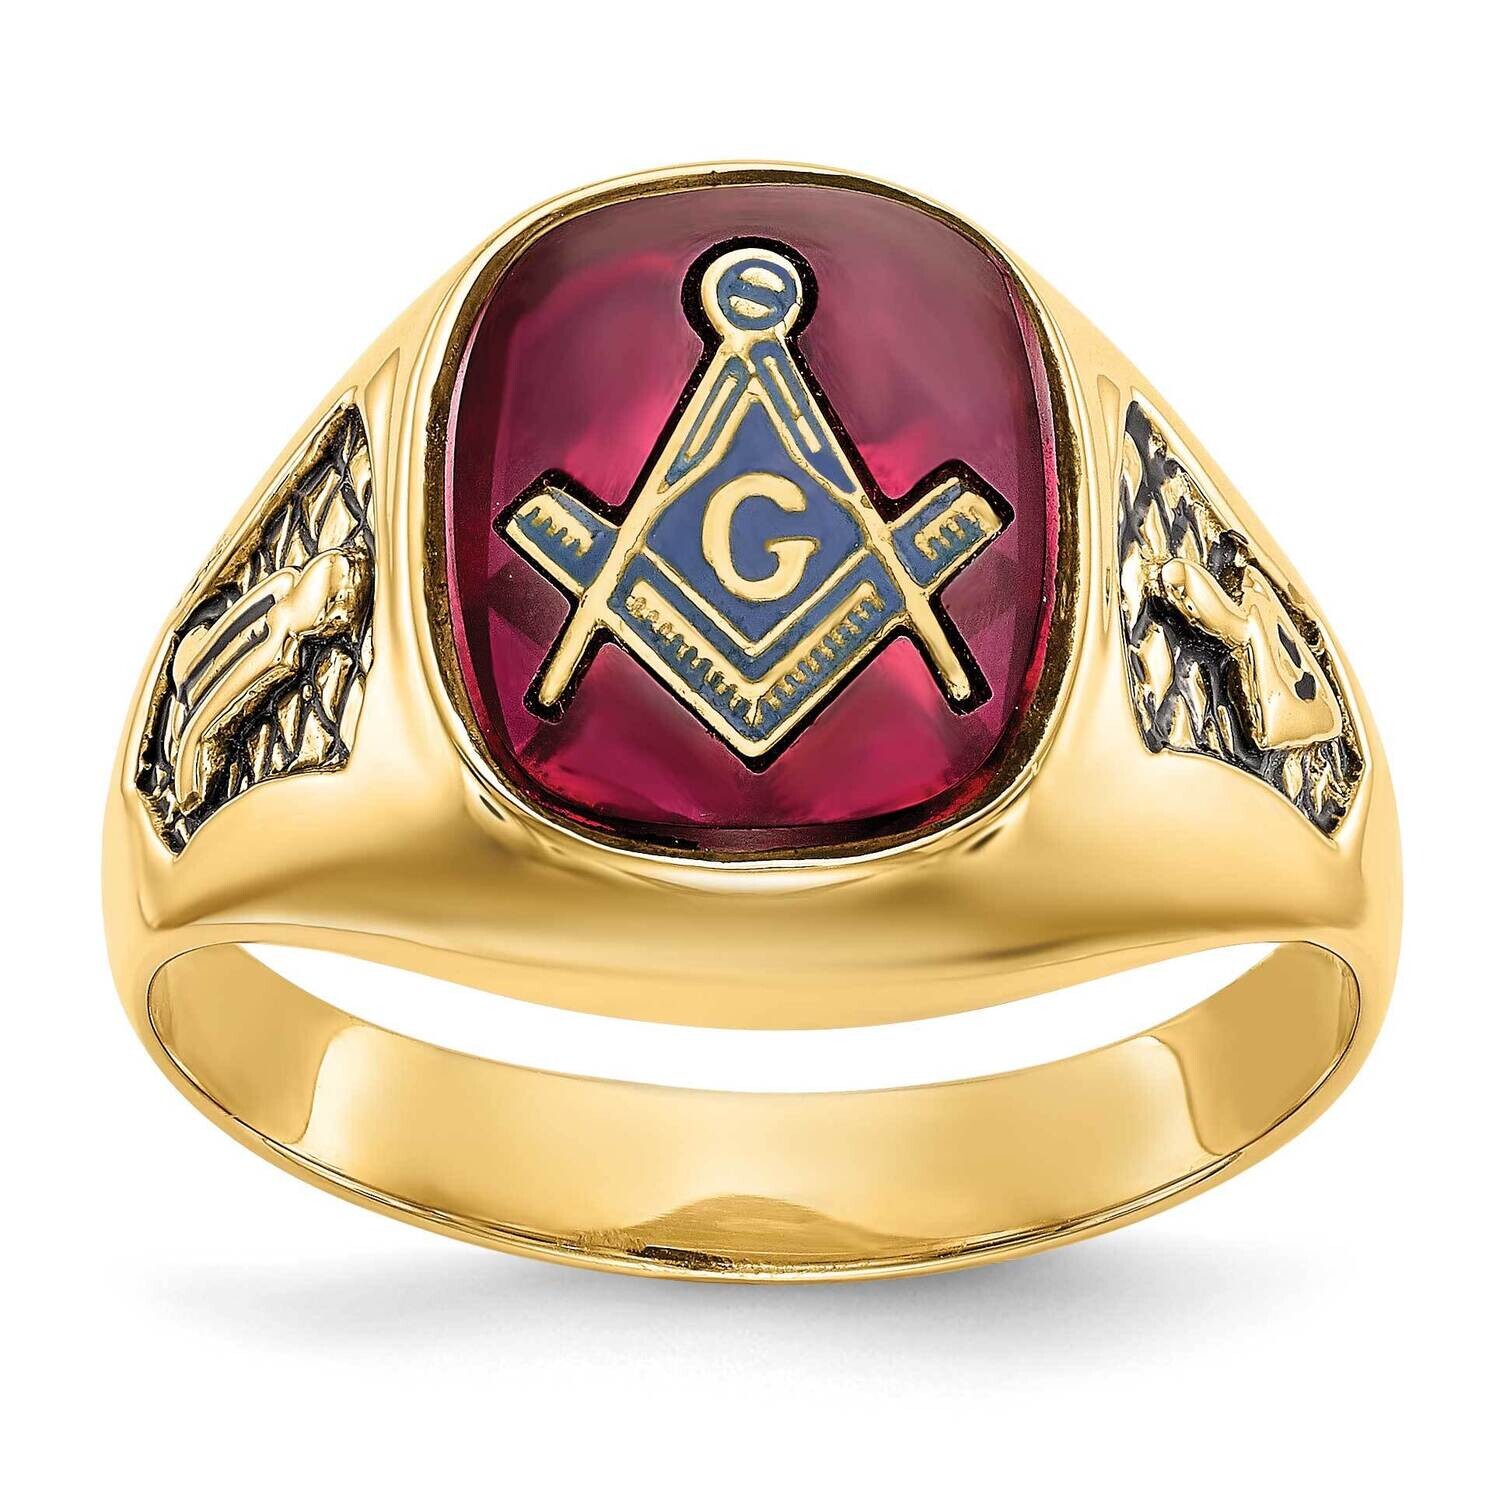 Men's Polished Textured Black Enamel Lab Created Ruby Masonic Ring 10k Gold 10Y1583M